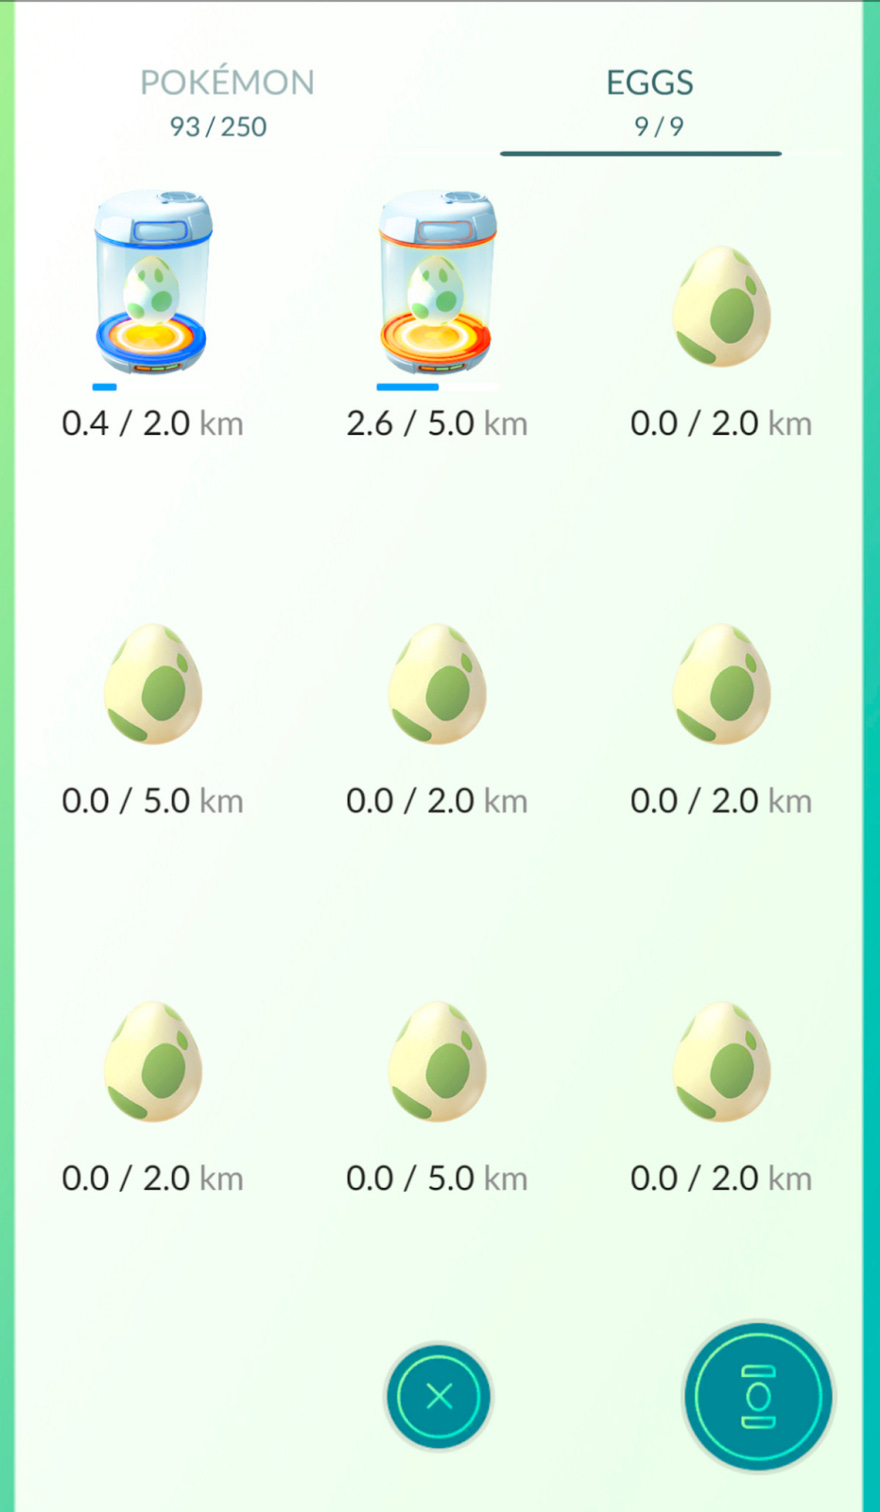 Pokemon Go’s egg incubator screenshot.